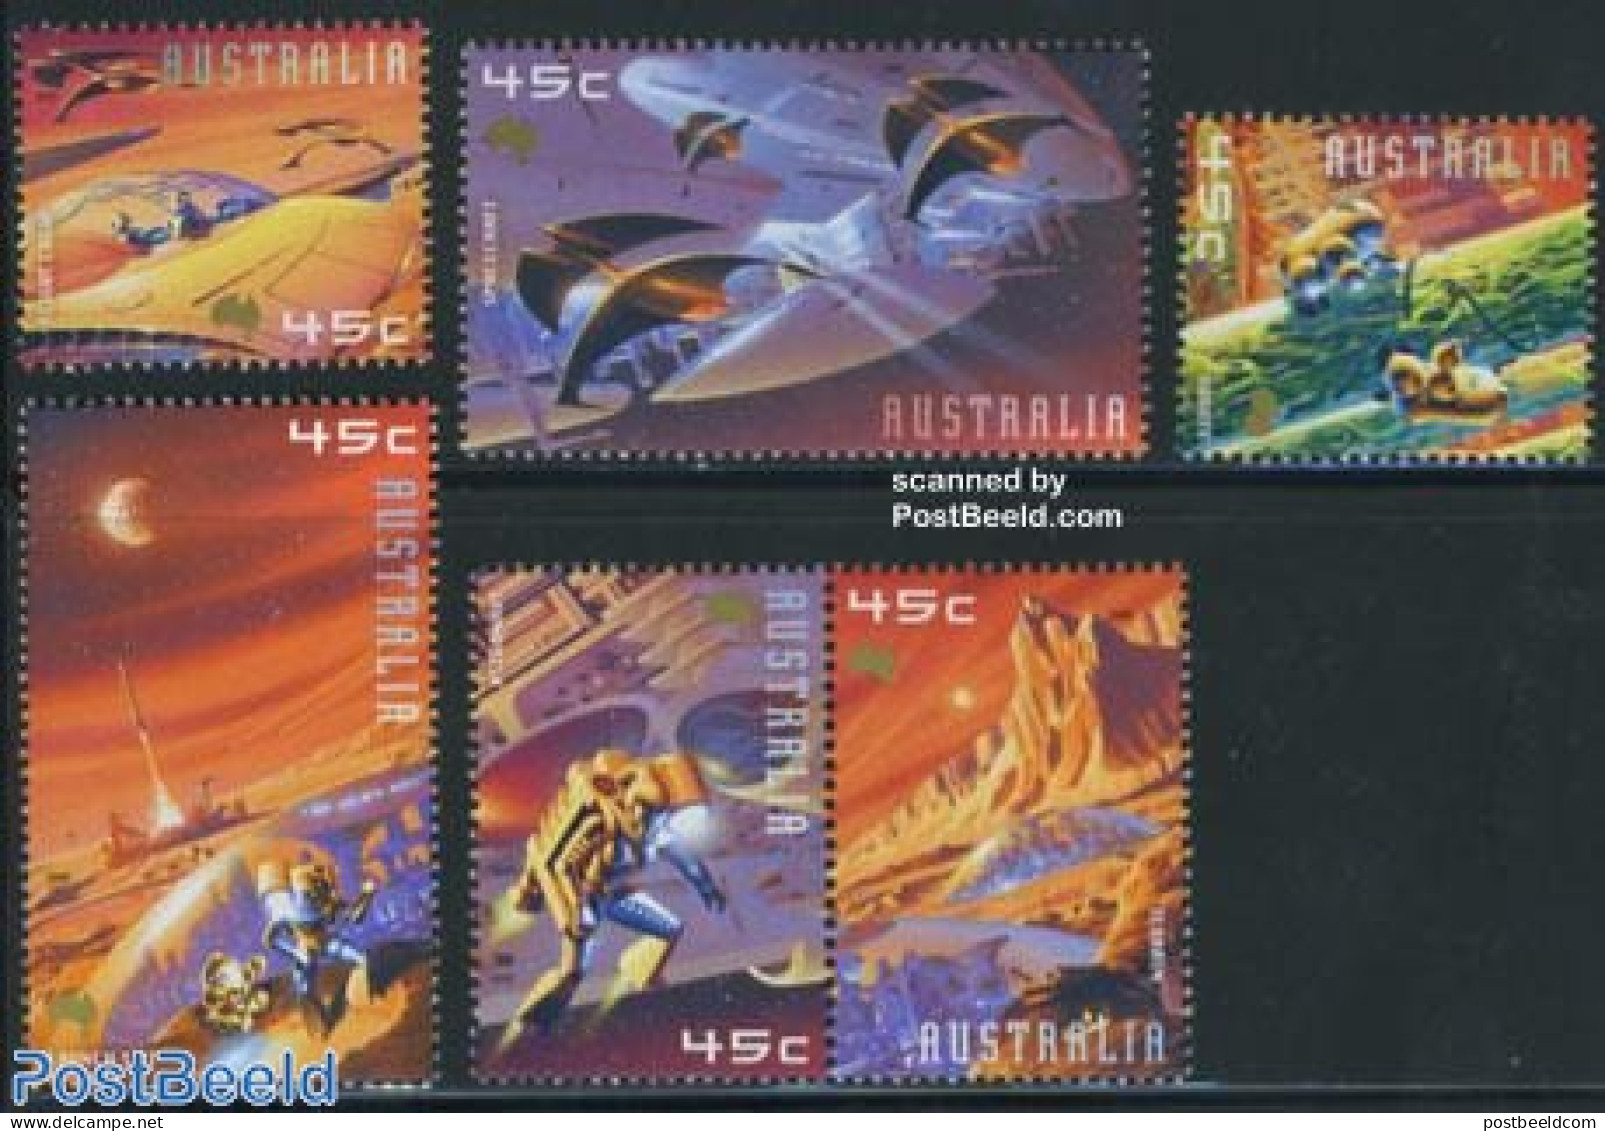 Australia 2000 Mars 6v (4v+[:]), Mint NH, Transport - Space Exploration - Art - Science Fiction - Nuevos